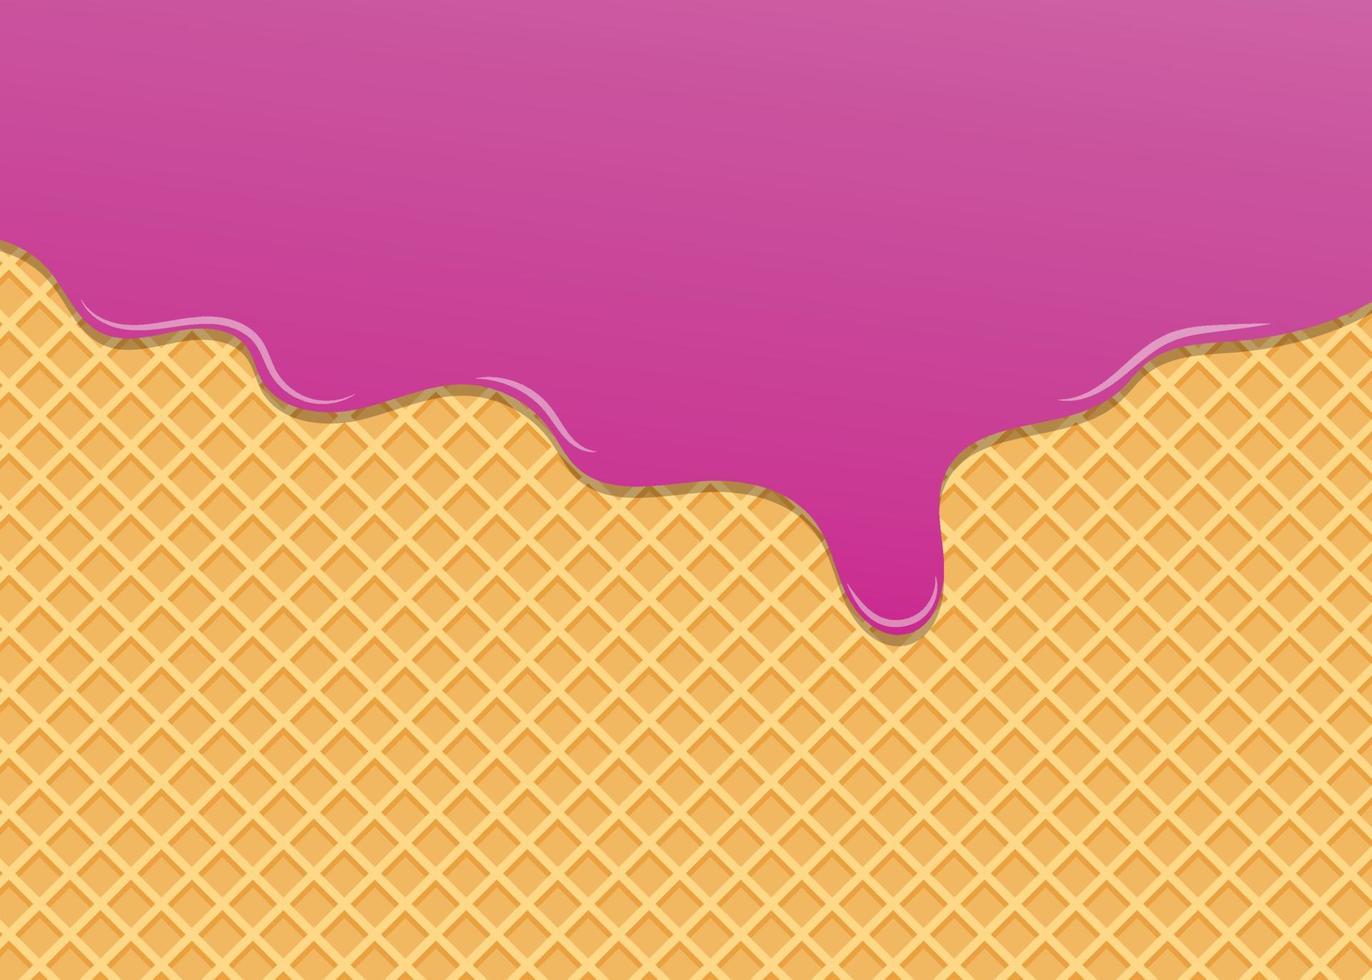 Melted strawberry cream on waffle background sweet ice cream background vector illustration